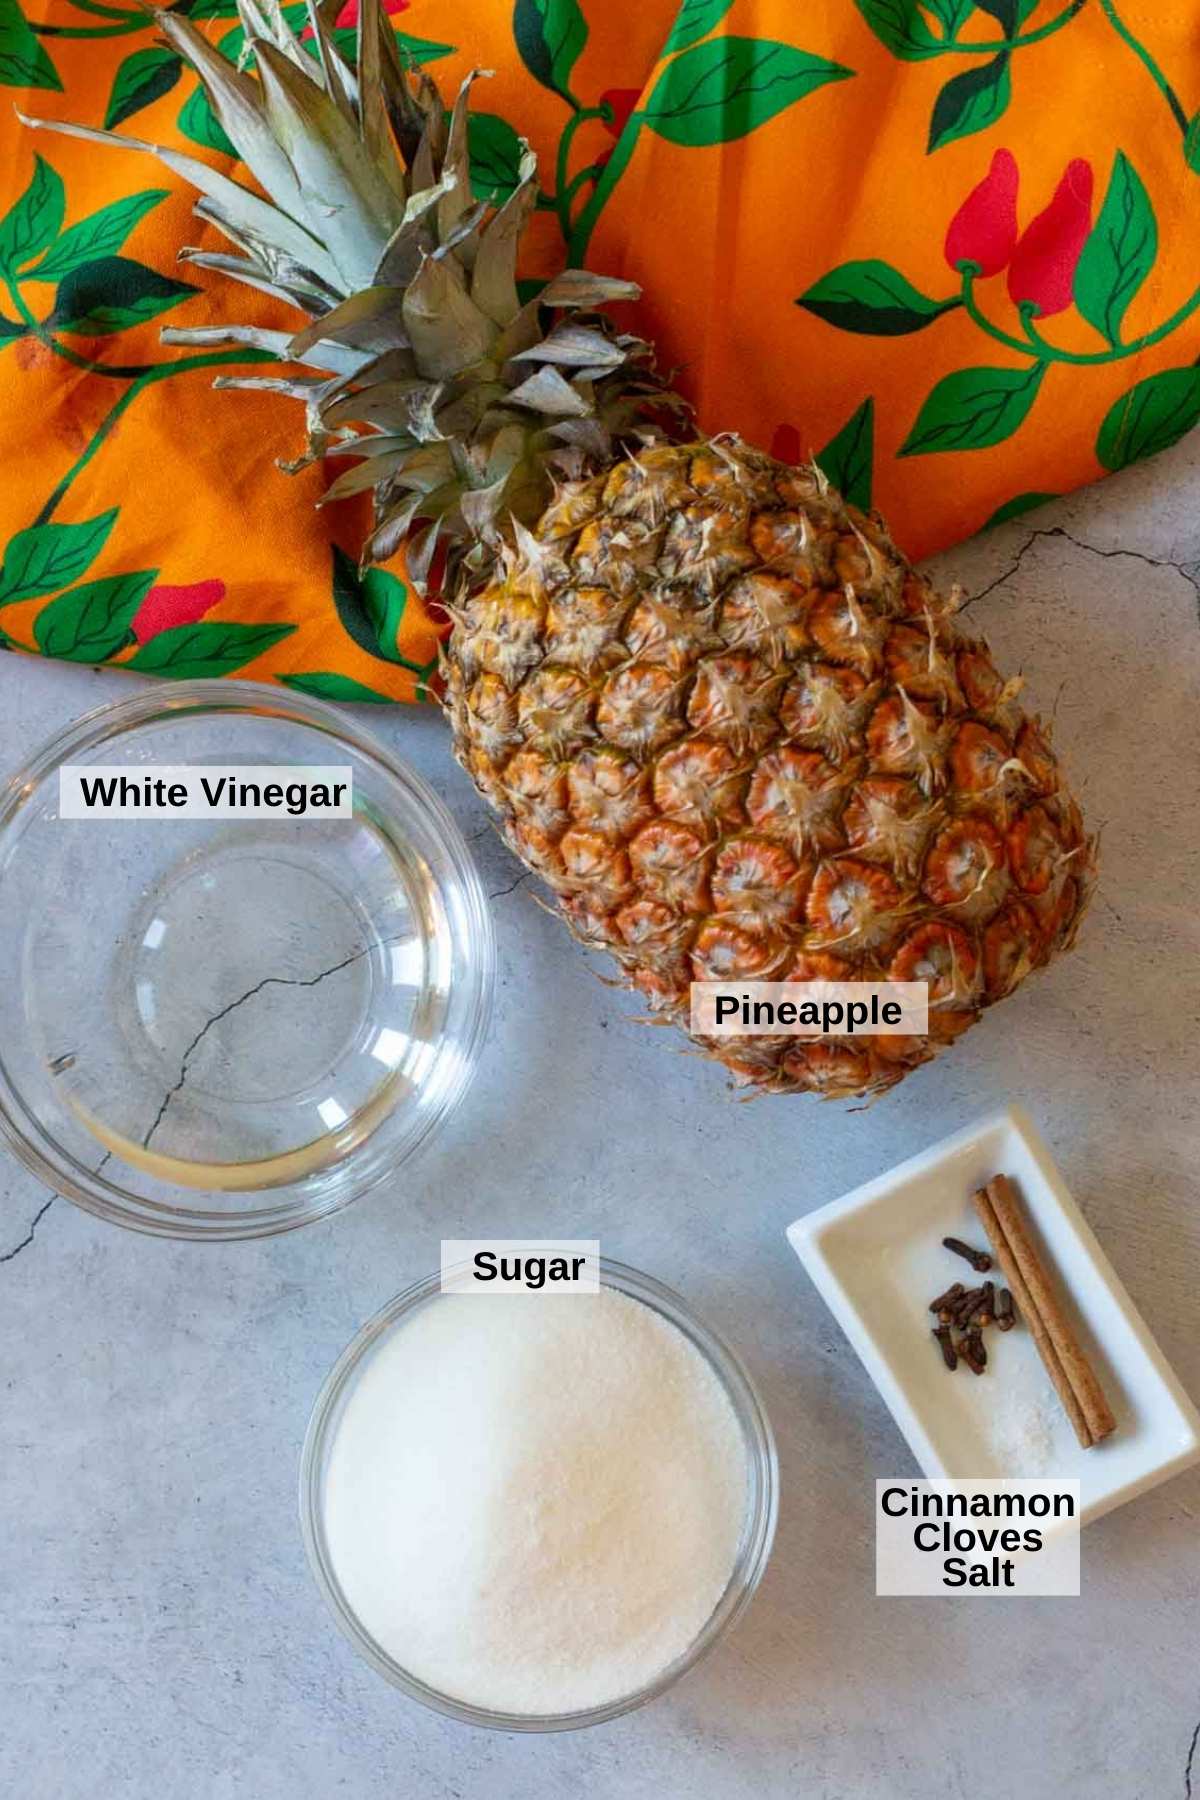 Ingredients to make pickled pineapple.